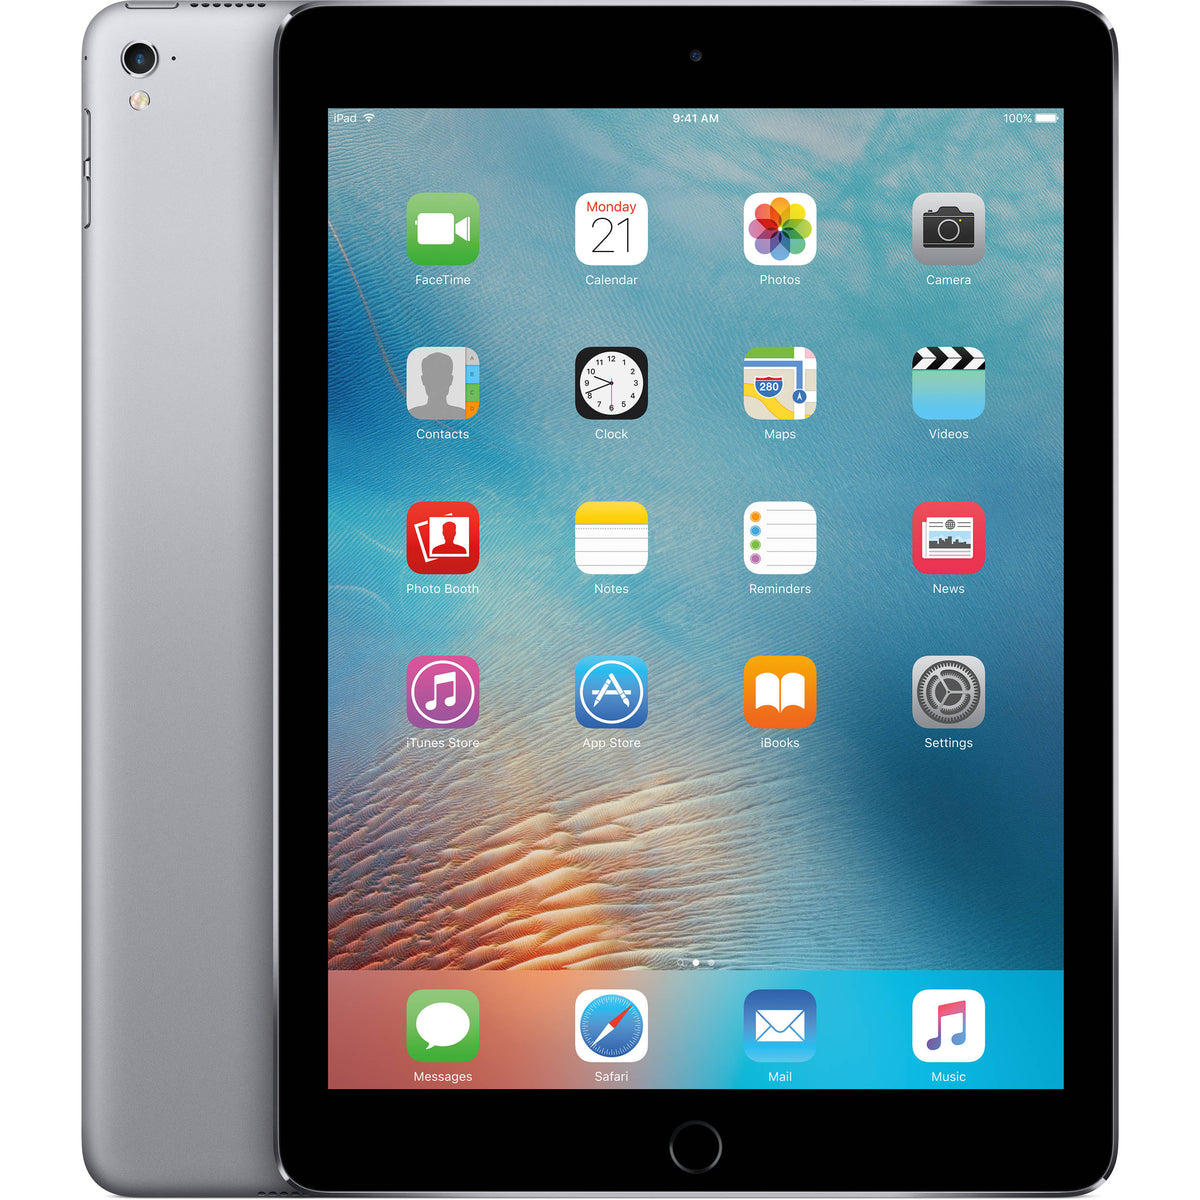 iPad Apple IPAD AIR 10,9" PUCE APPLE M1 64 GO GRIS SIDERAL 5G